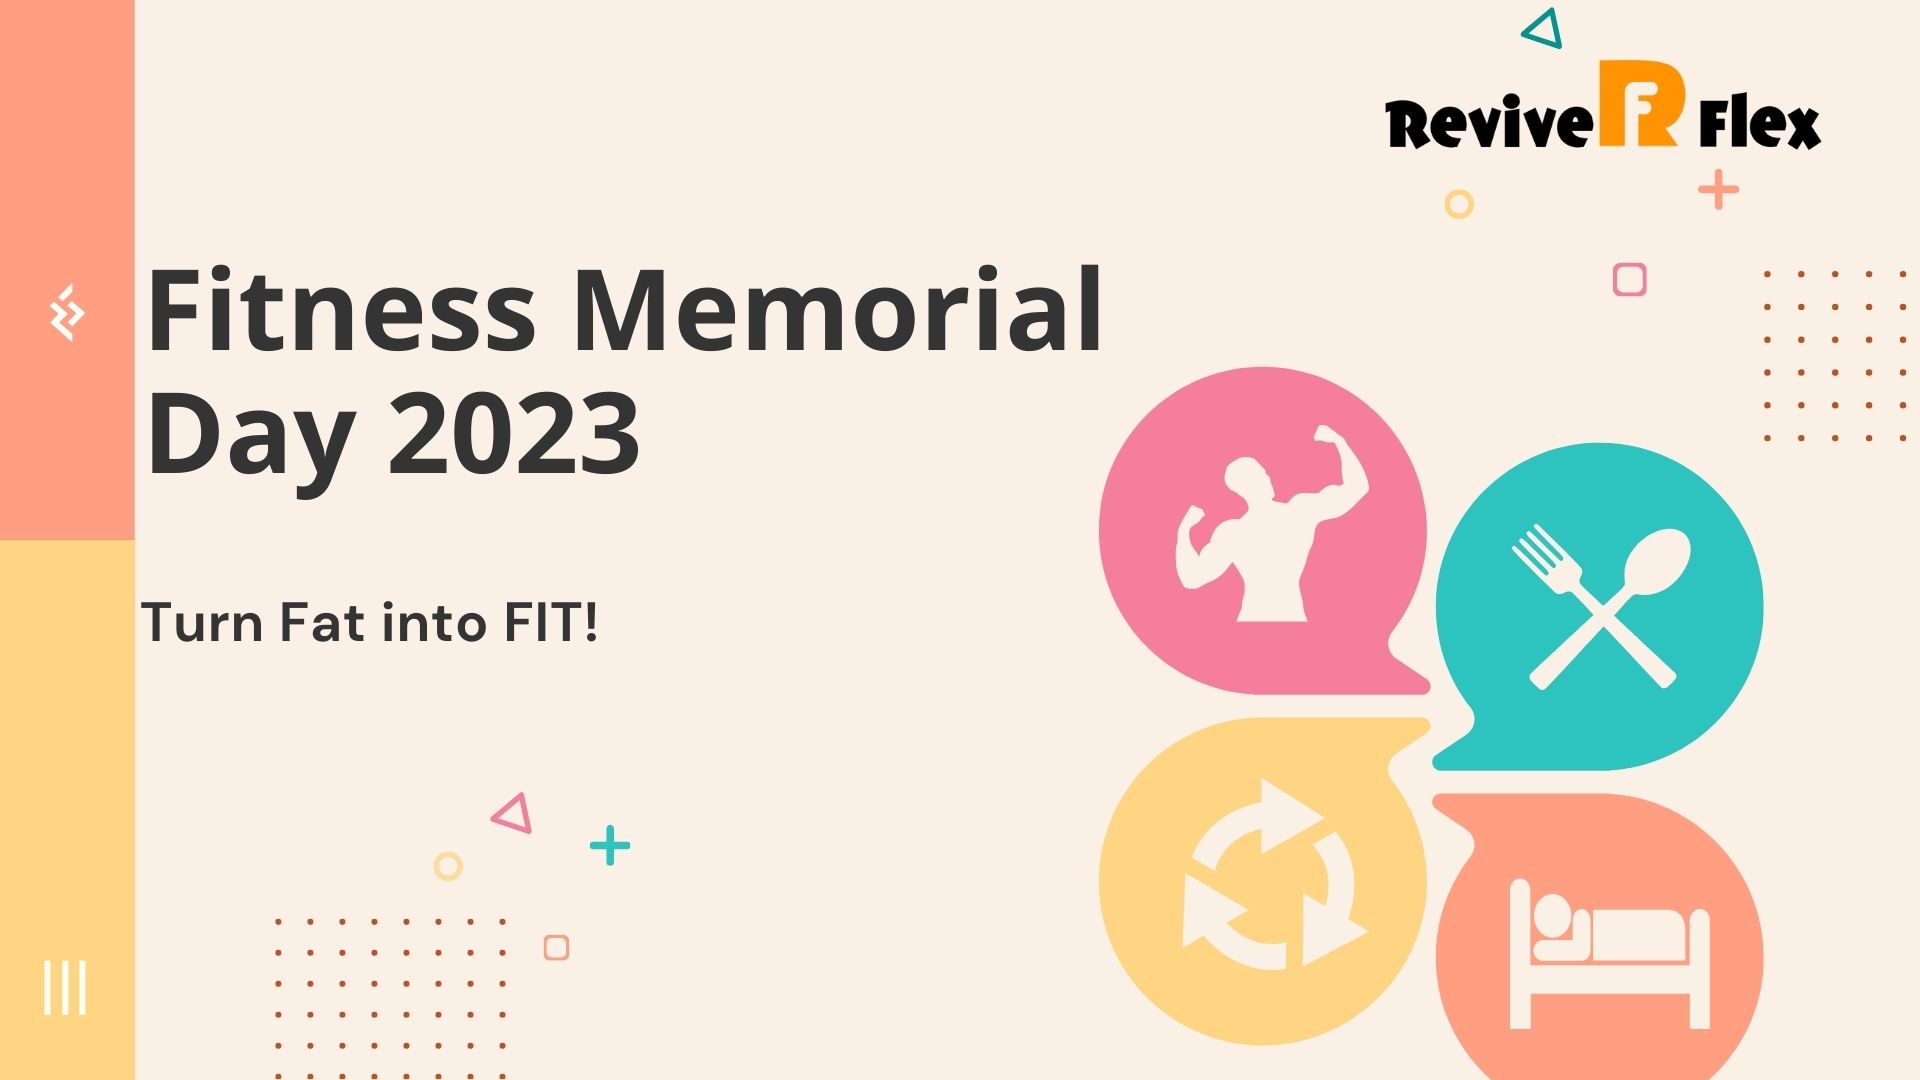 Fitness Memorial Day 2023 Revive Flex